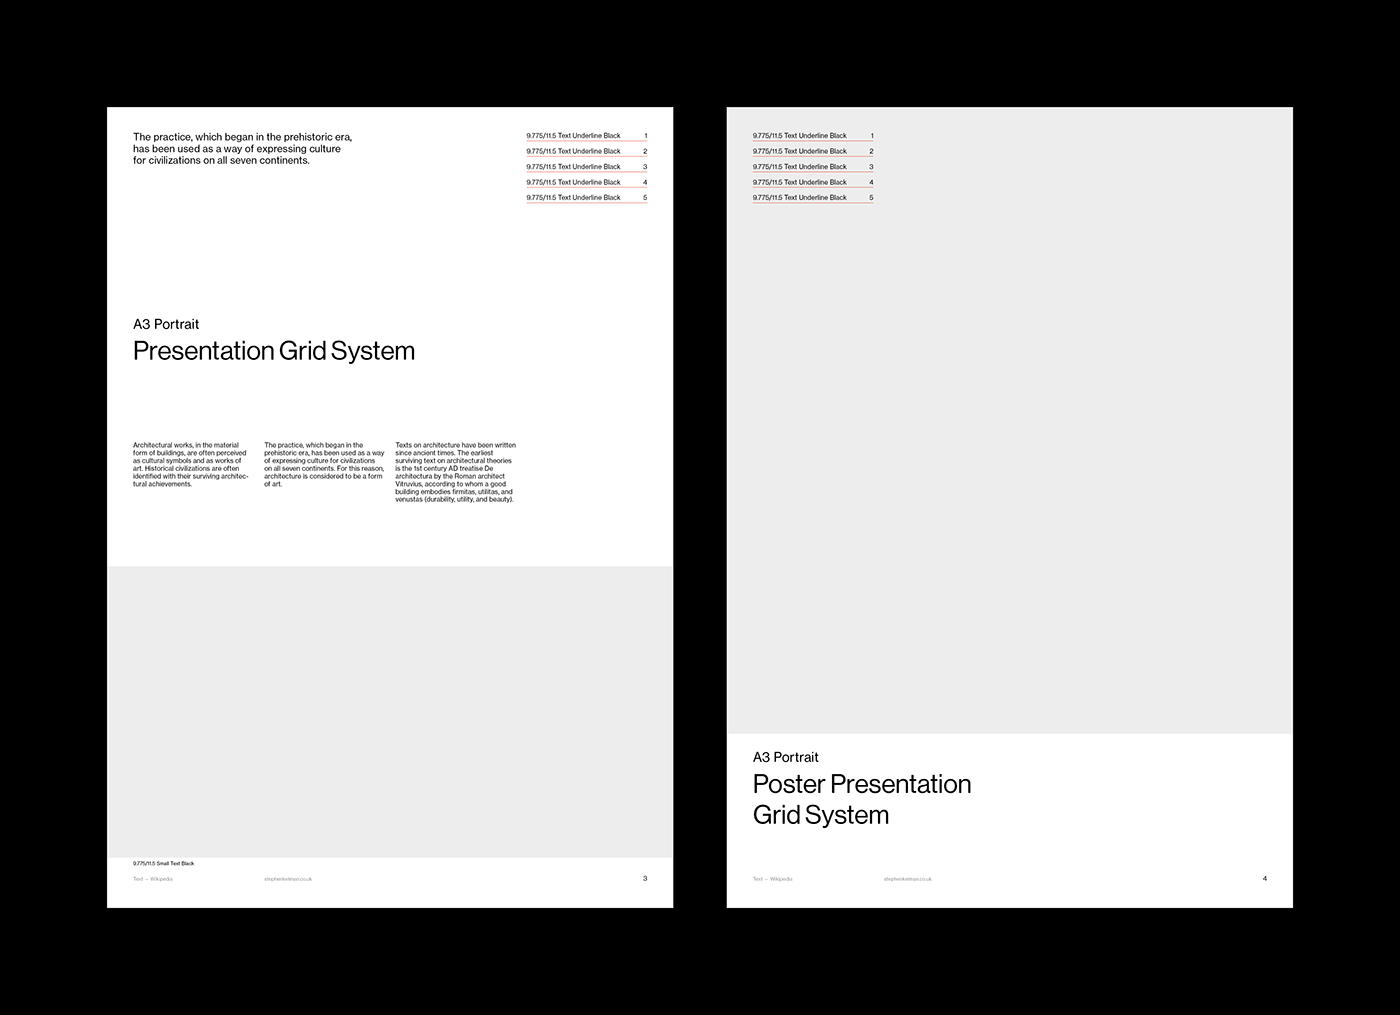 A3 Portrait Presentation Grid System – large images and less copy